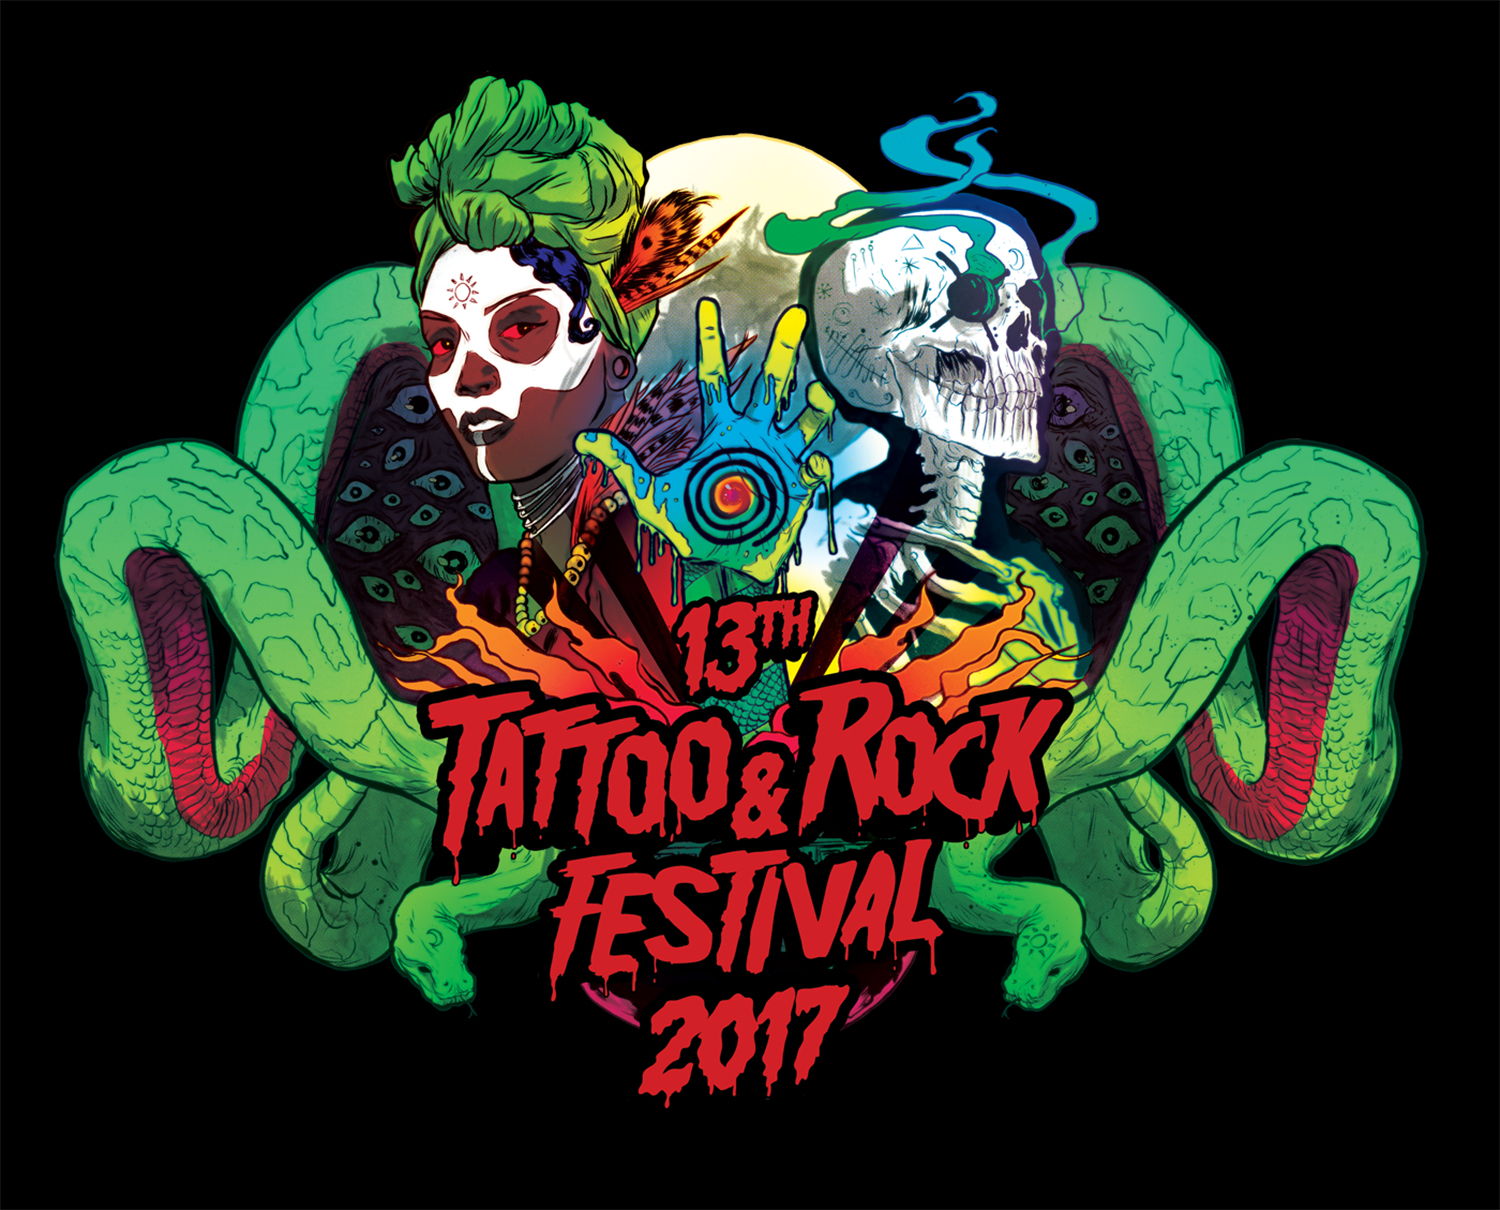 13th tattoo&rock festival, poster, lisbon, illustration by ricardo reis